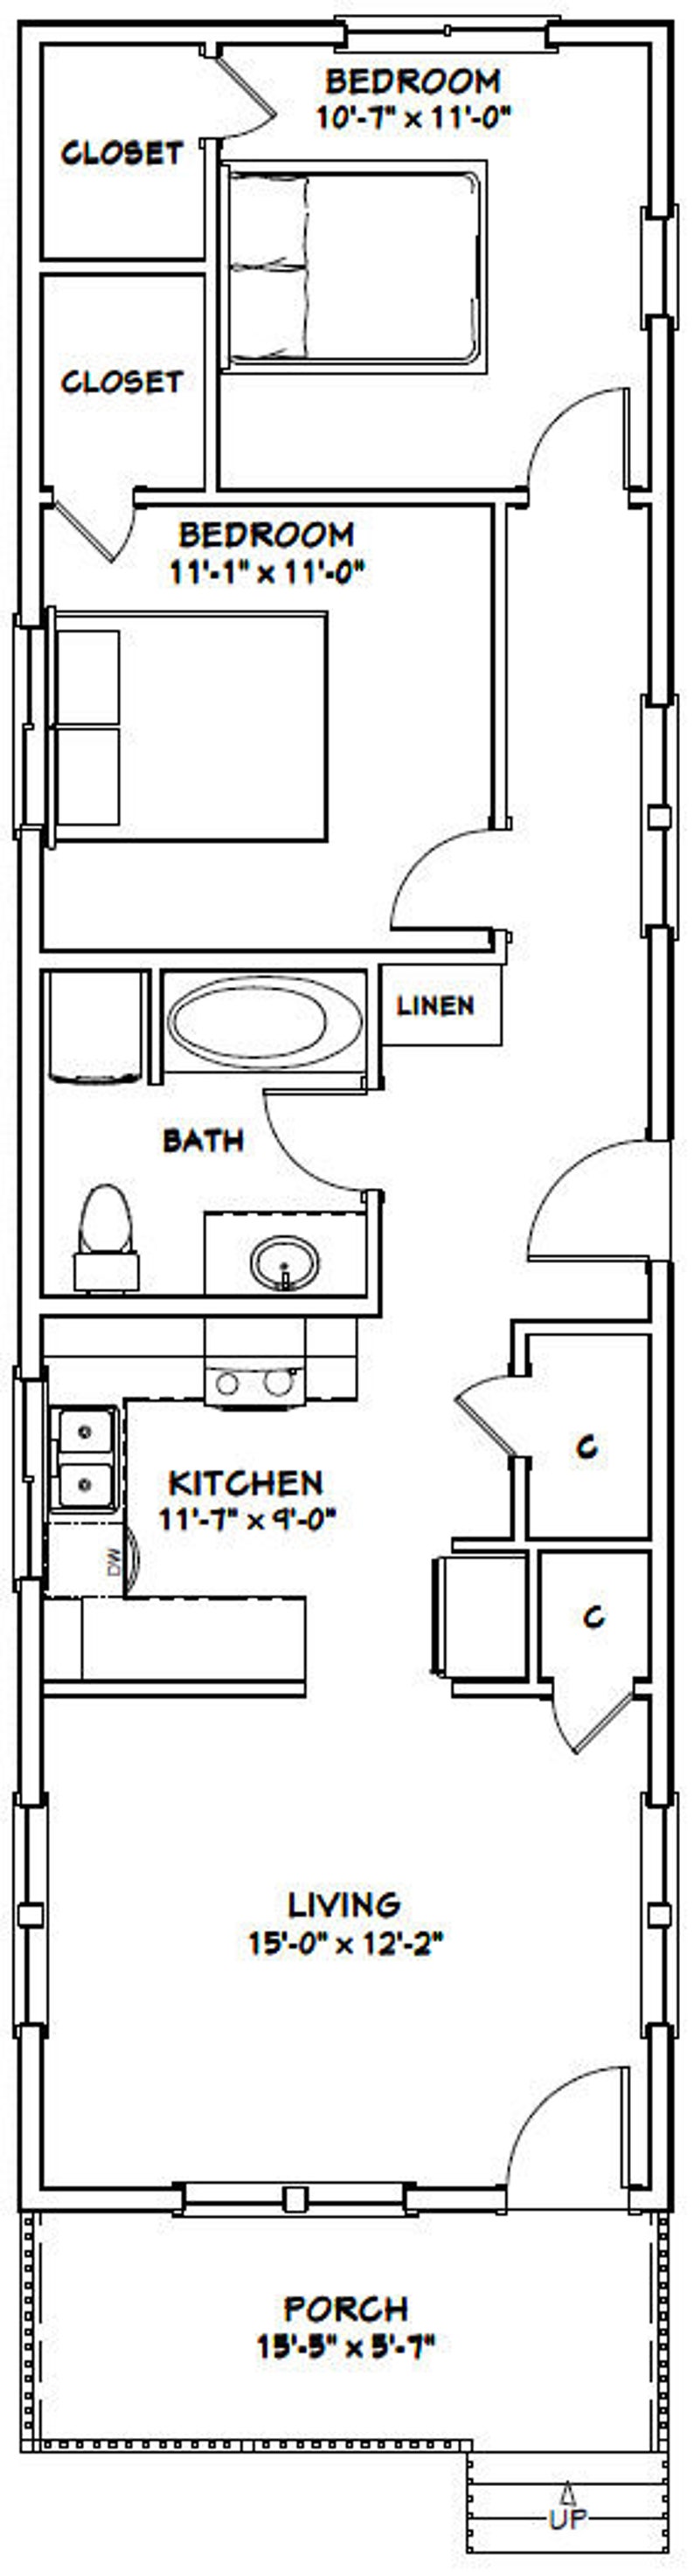 16x54 House 2Bedroom 1Bath 864 sq ft PDF Floor Plan Etsy